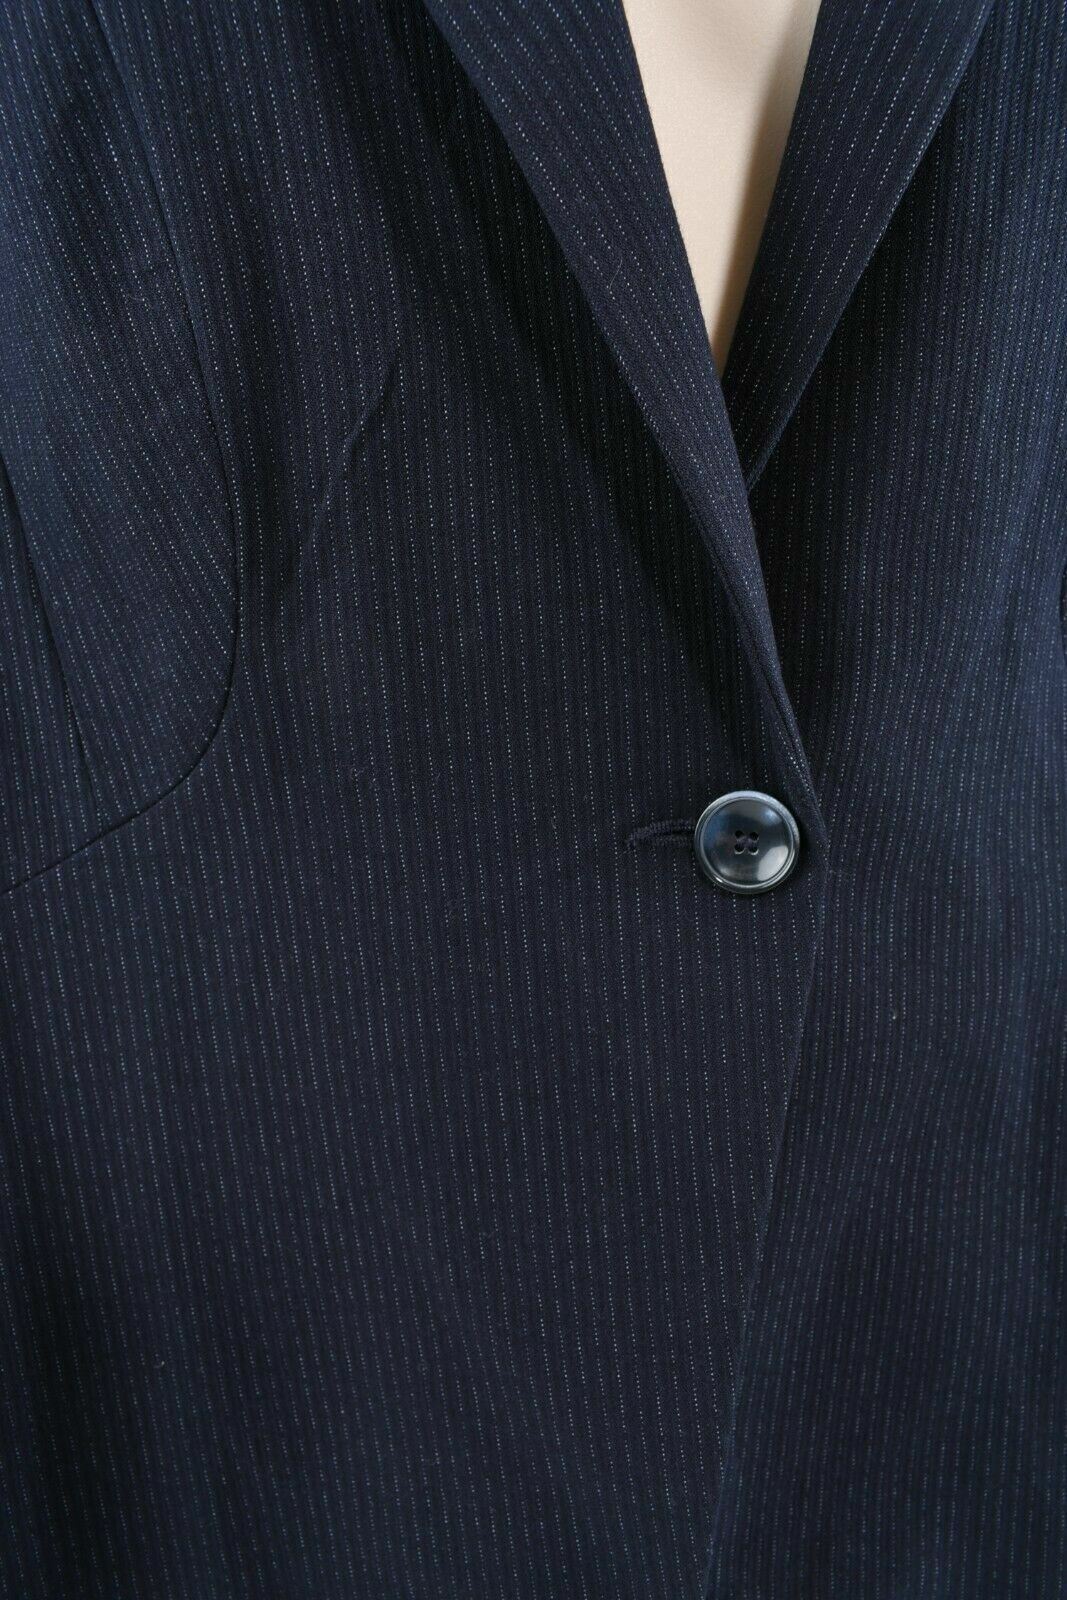 NEXT Women's Tailored Blazer Jacket, Pinstriped Navy Blue, size UK 10 R